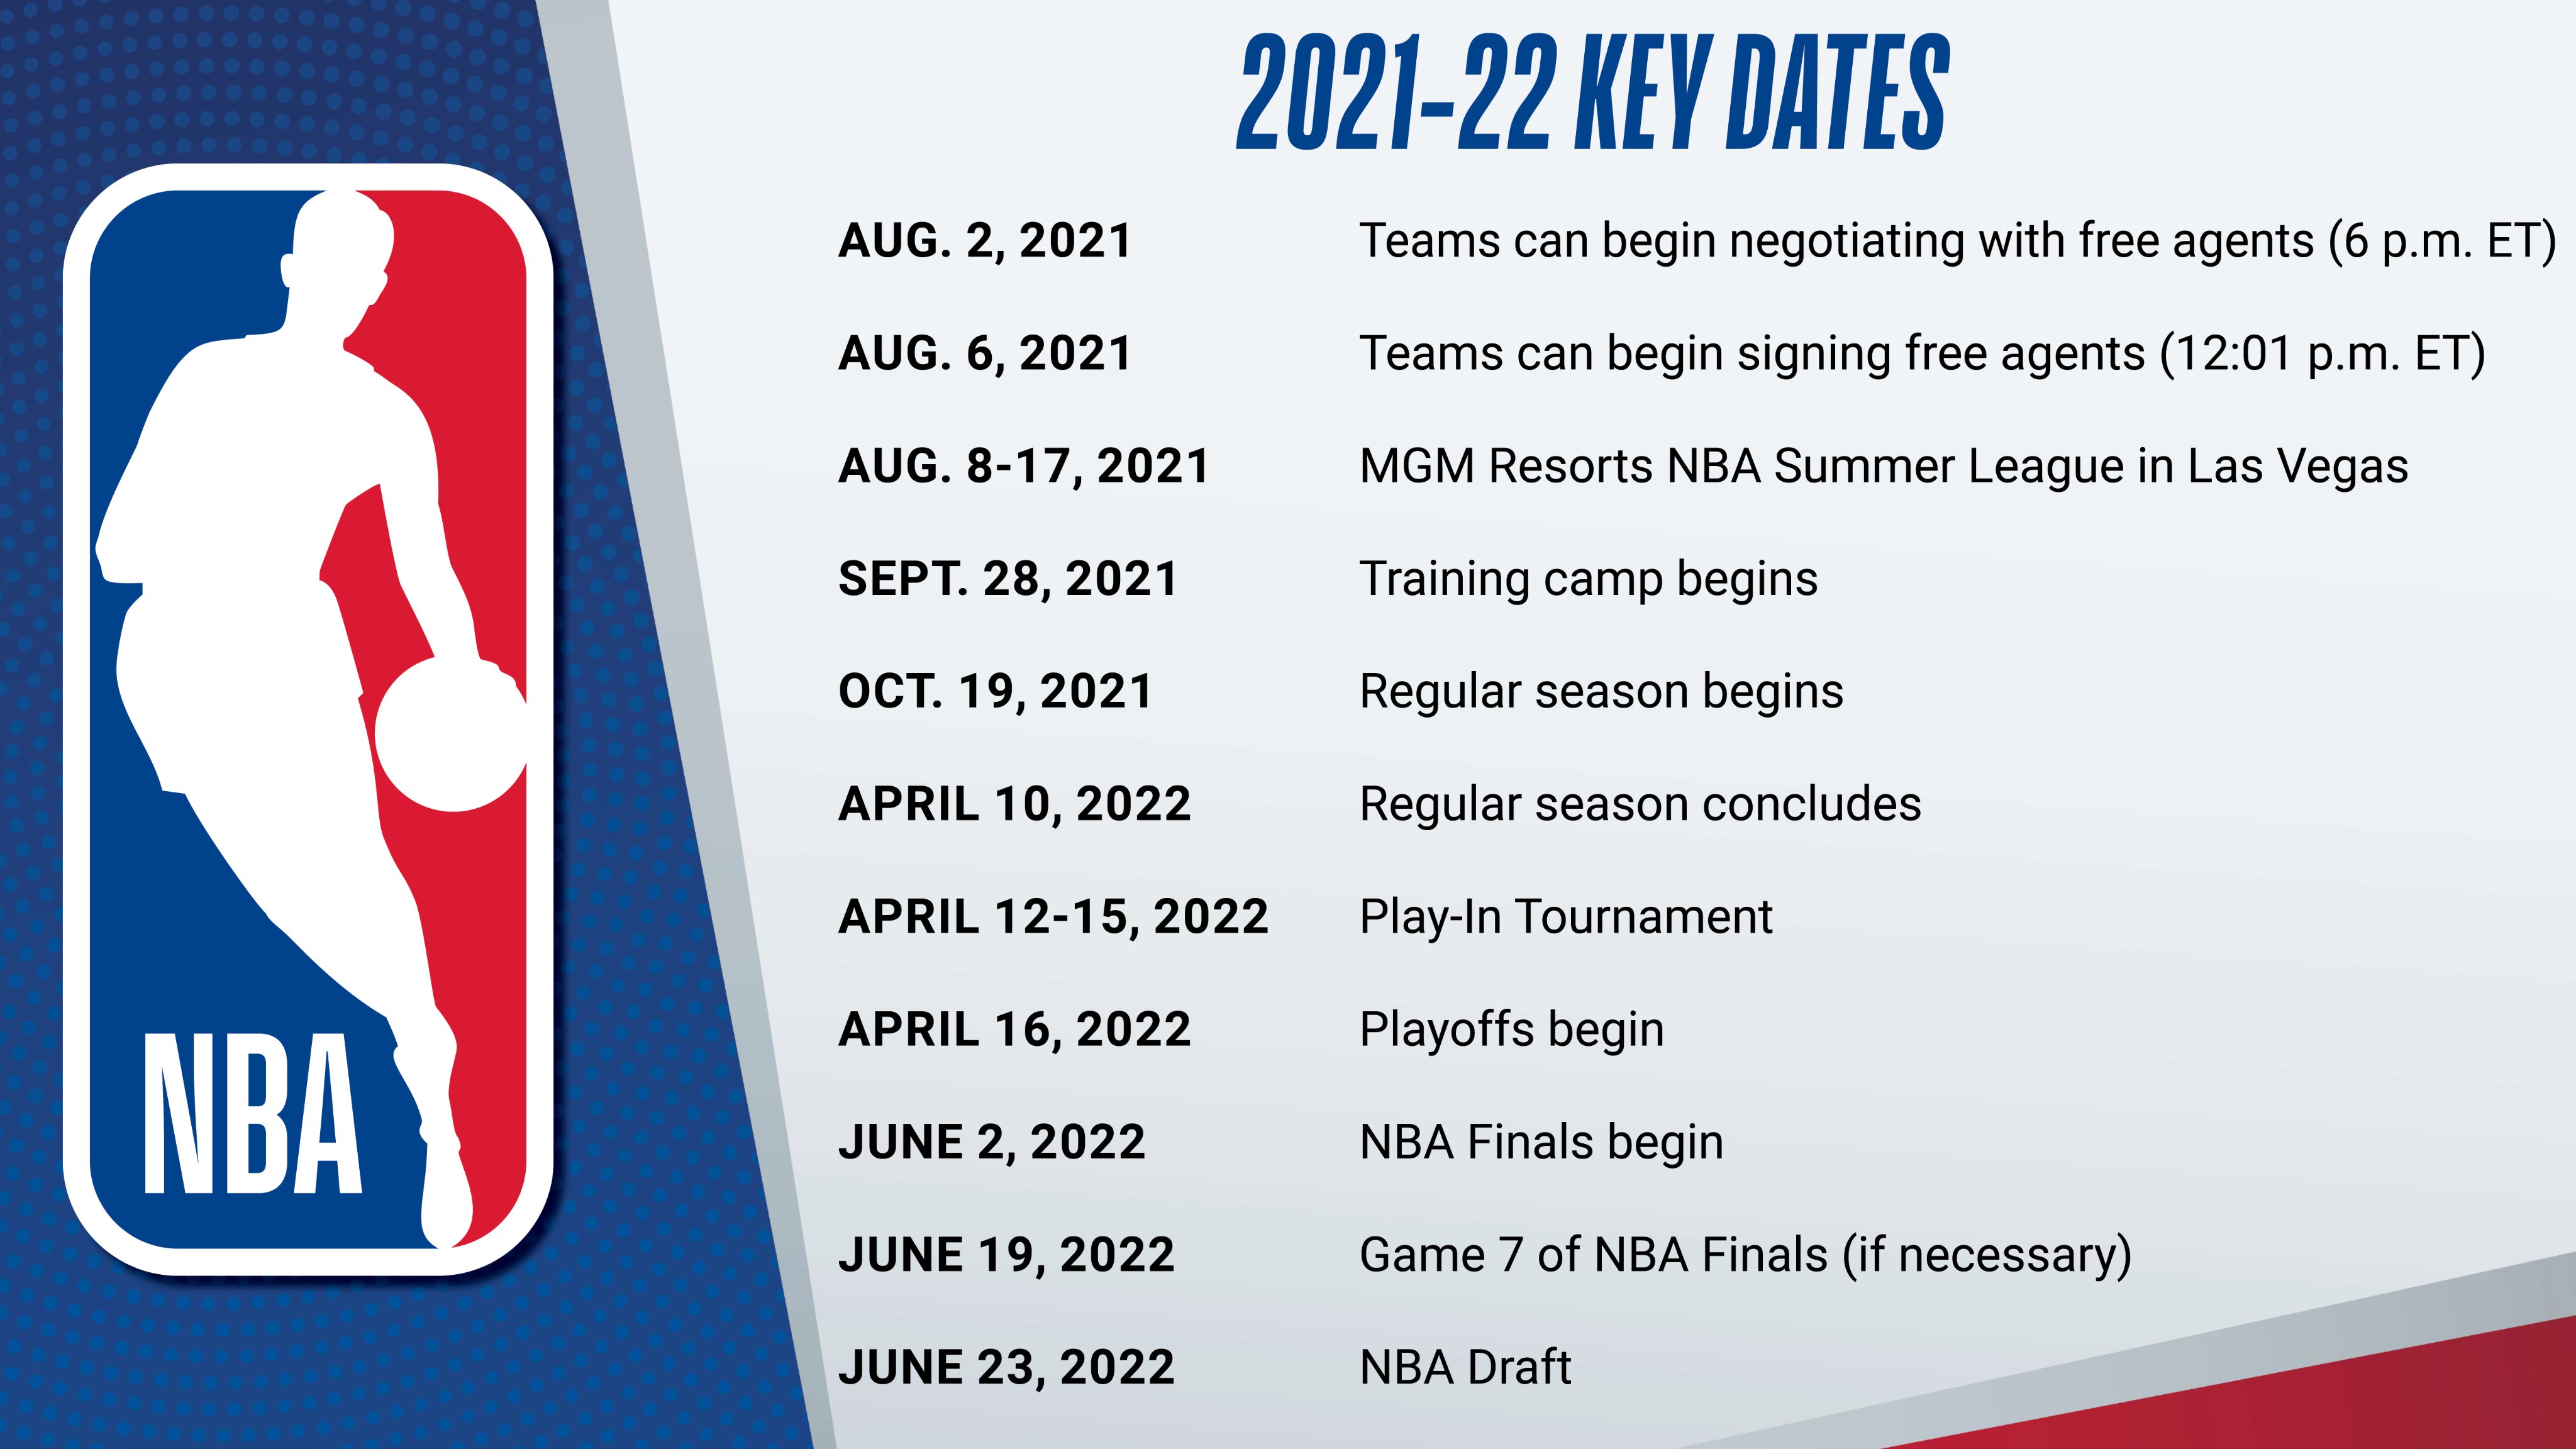 Nba Finals 2022 Schedule Nba Communications On Twitter: "Key Dates For The 2021-22 Nba Season ⬇️  Https://T.co/Nbwcivrhzh" / Twitter